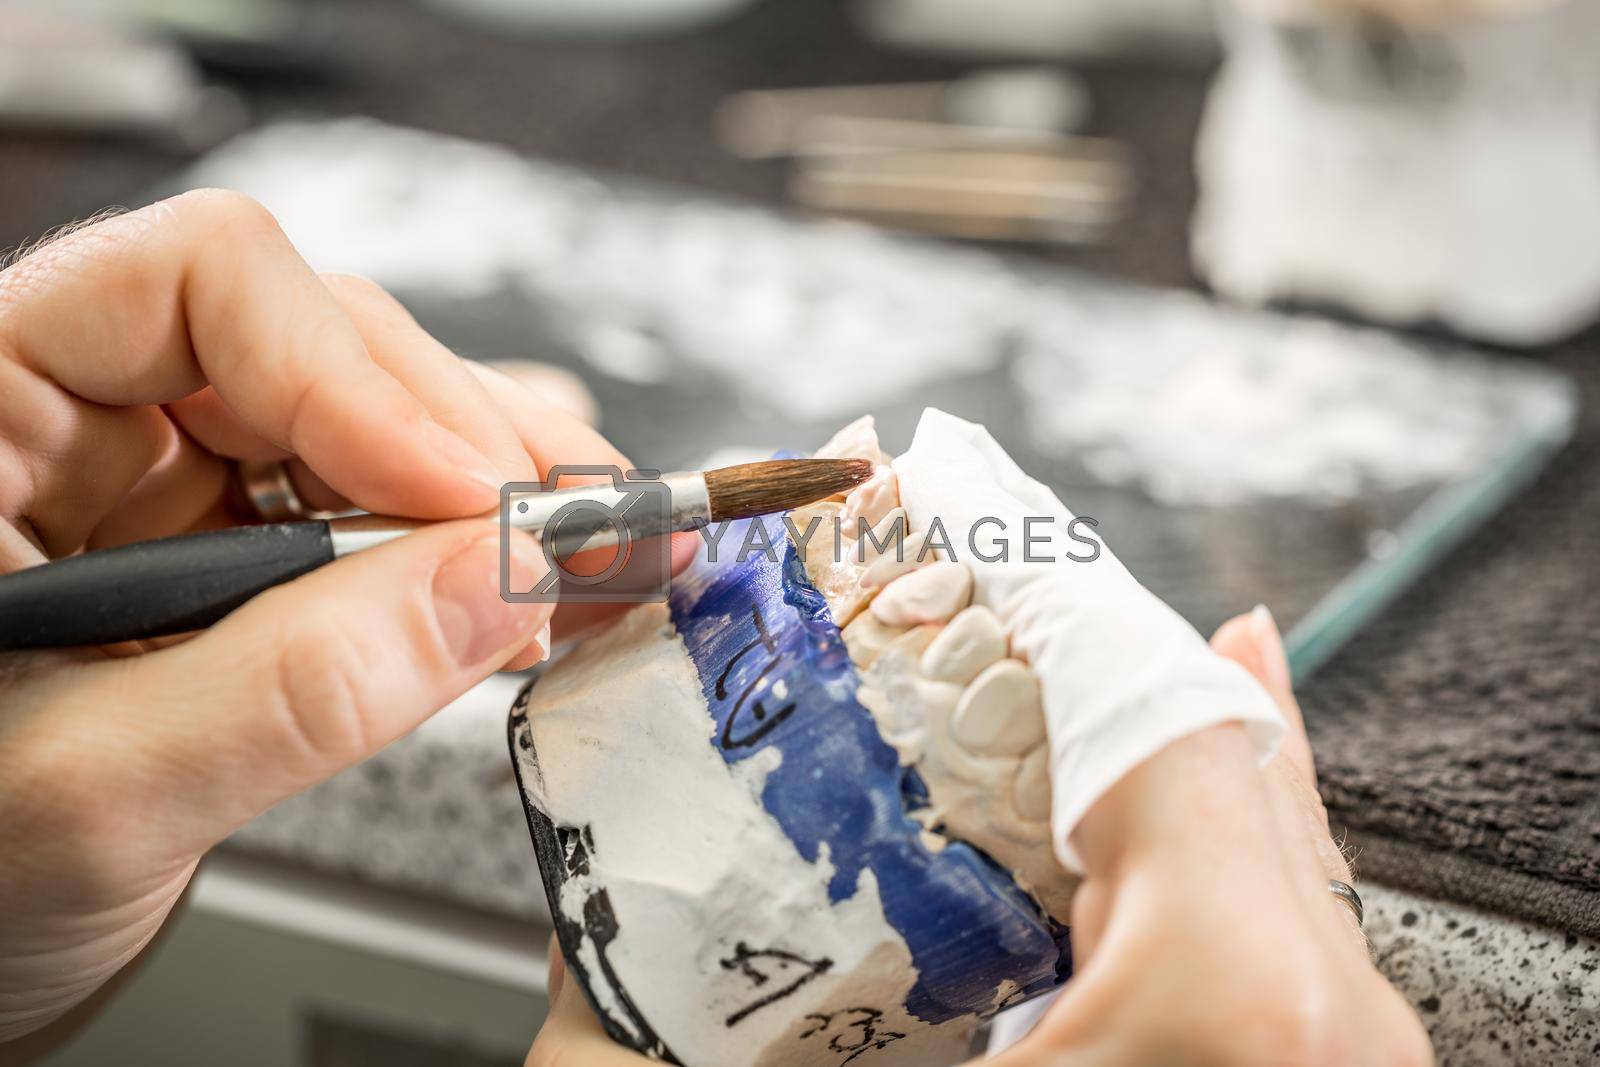 Dental technician working on dentures, painting